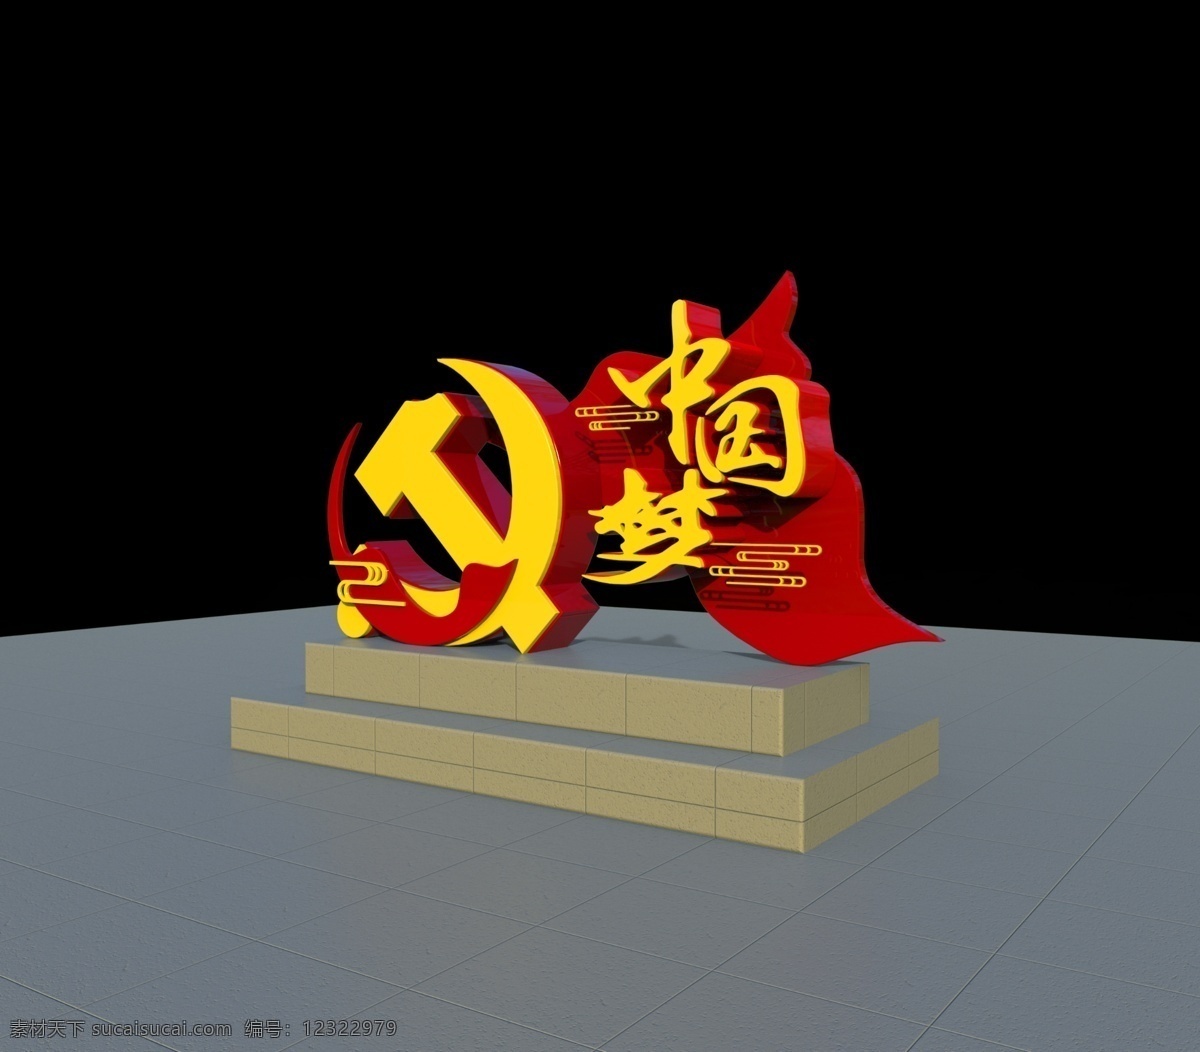 c4d 党建 广场 中国 梦 文化 宣传 雕塑 牌 中国梦 党徽 旗帜 宣传牌